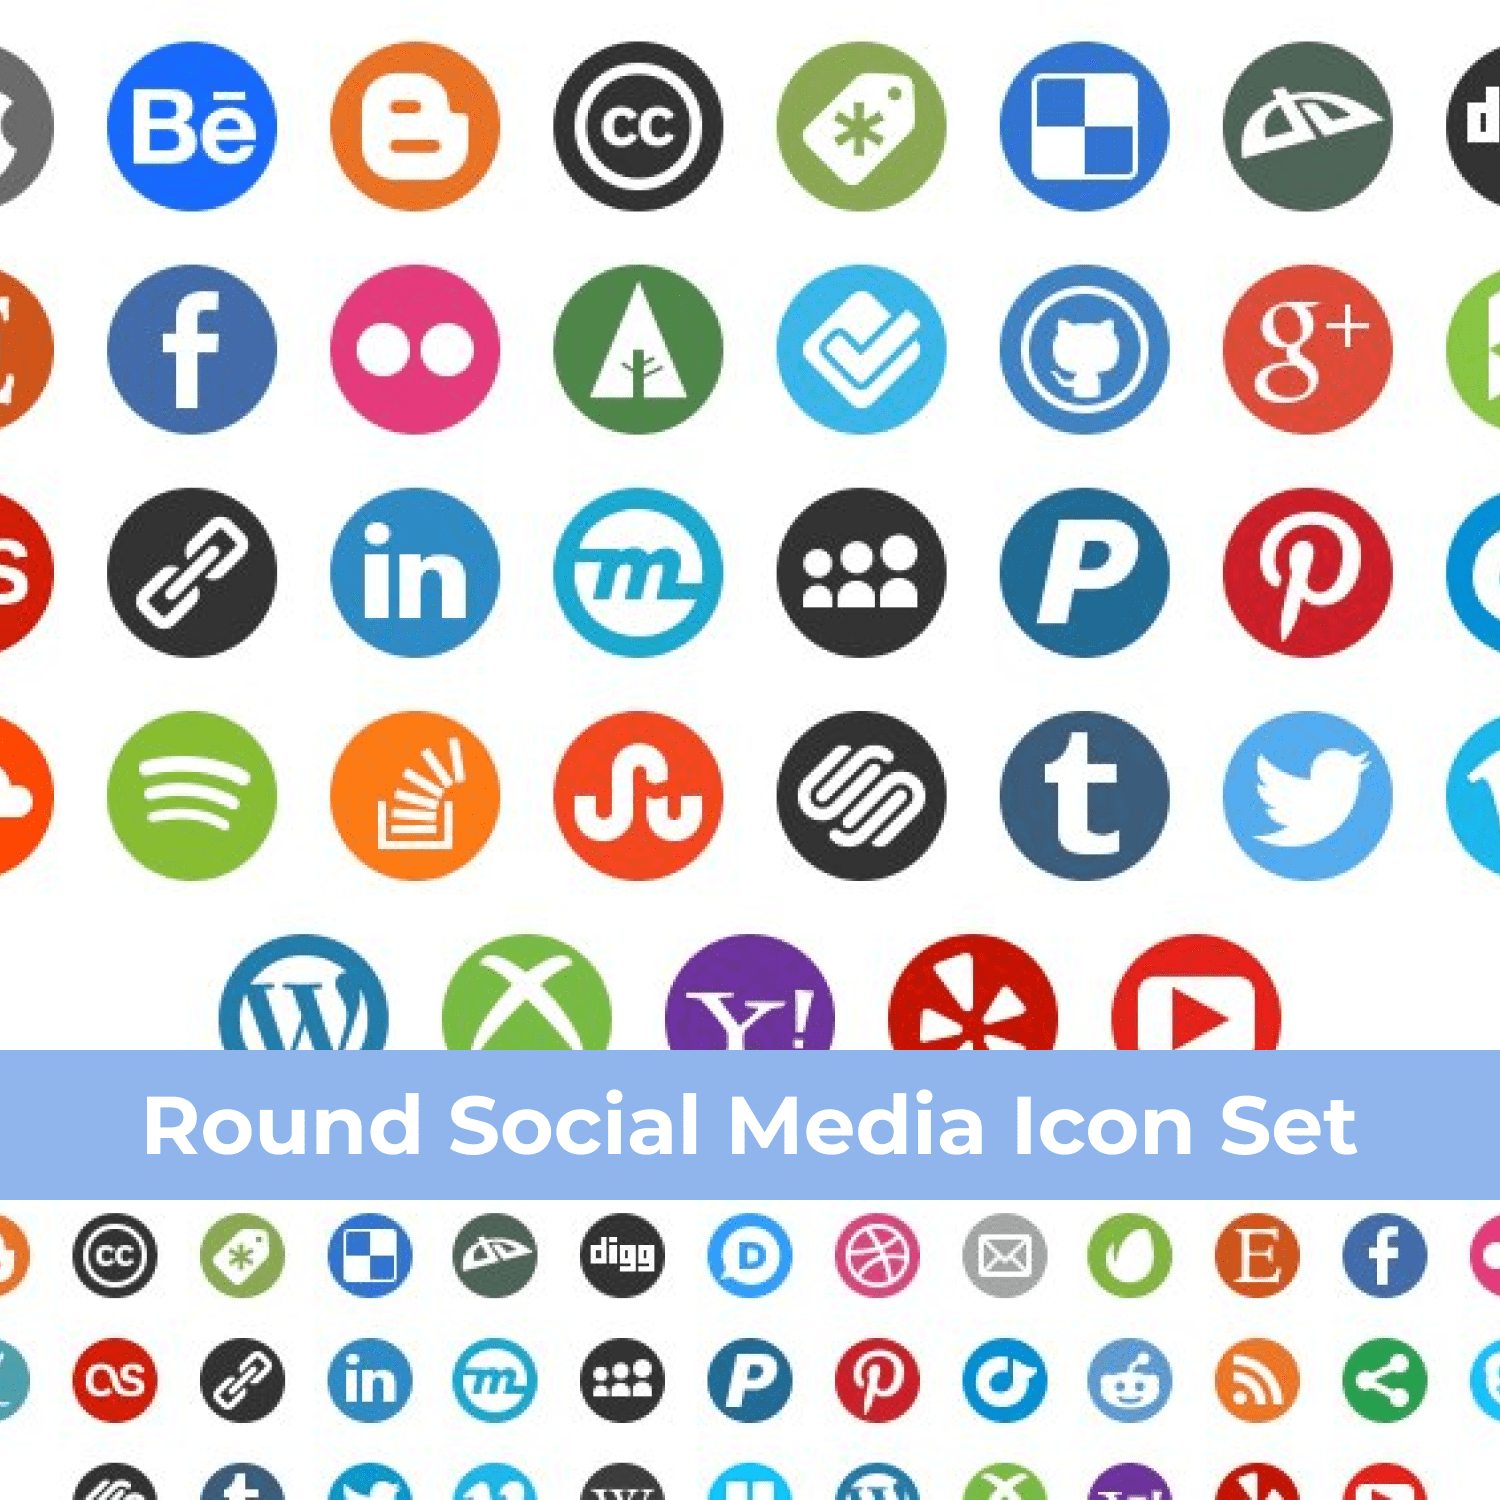 Round Social Media Icon Set cover image.